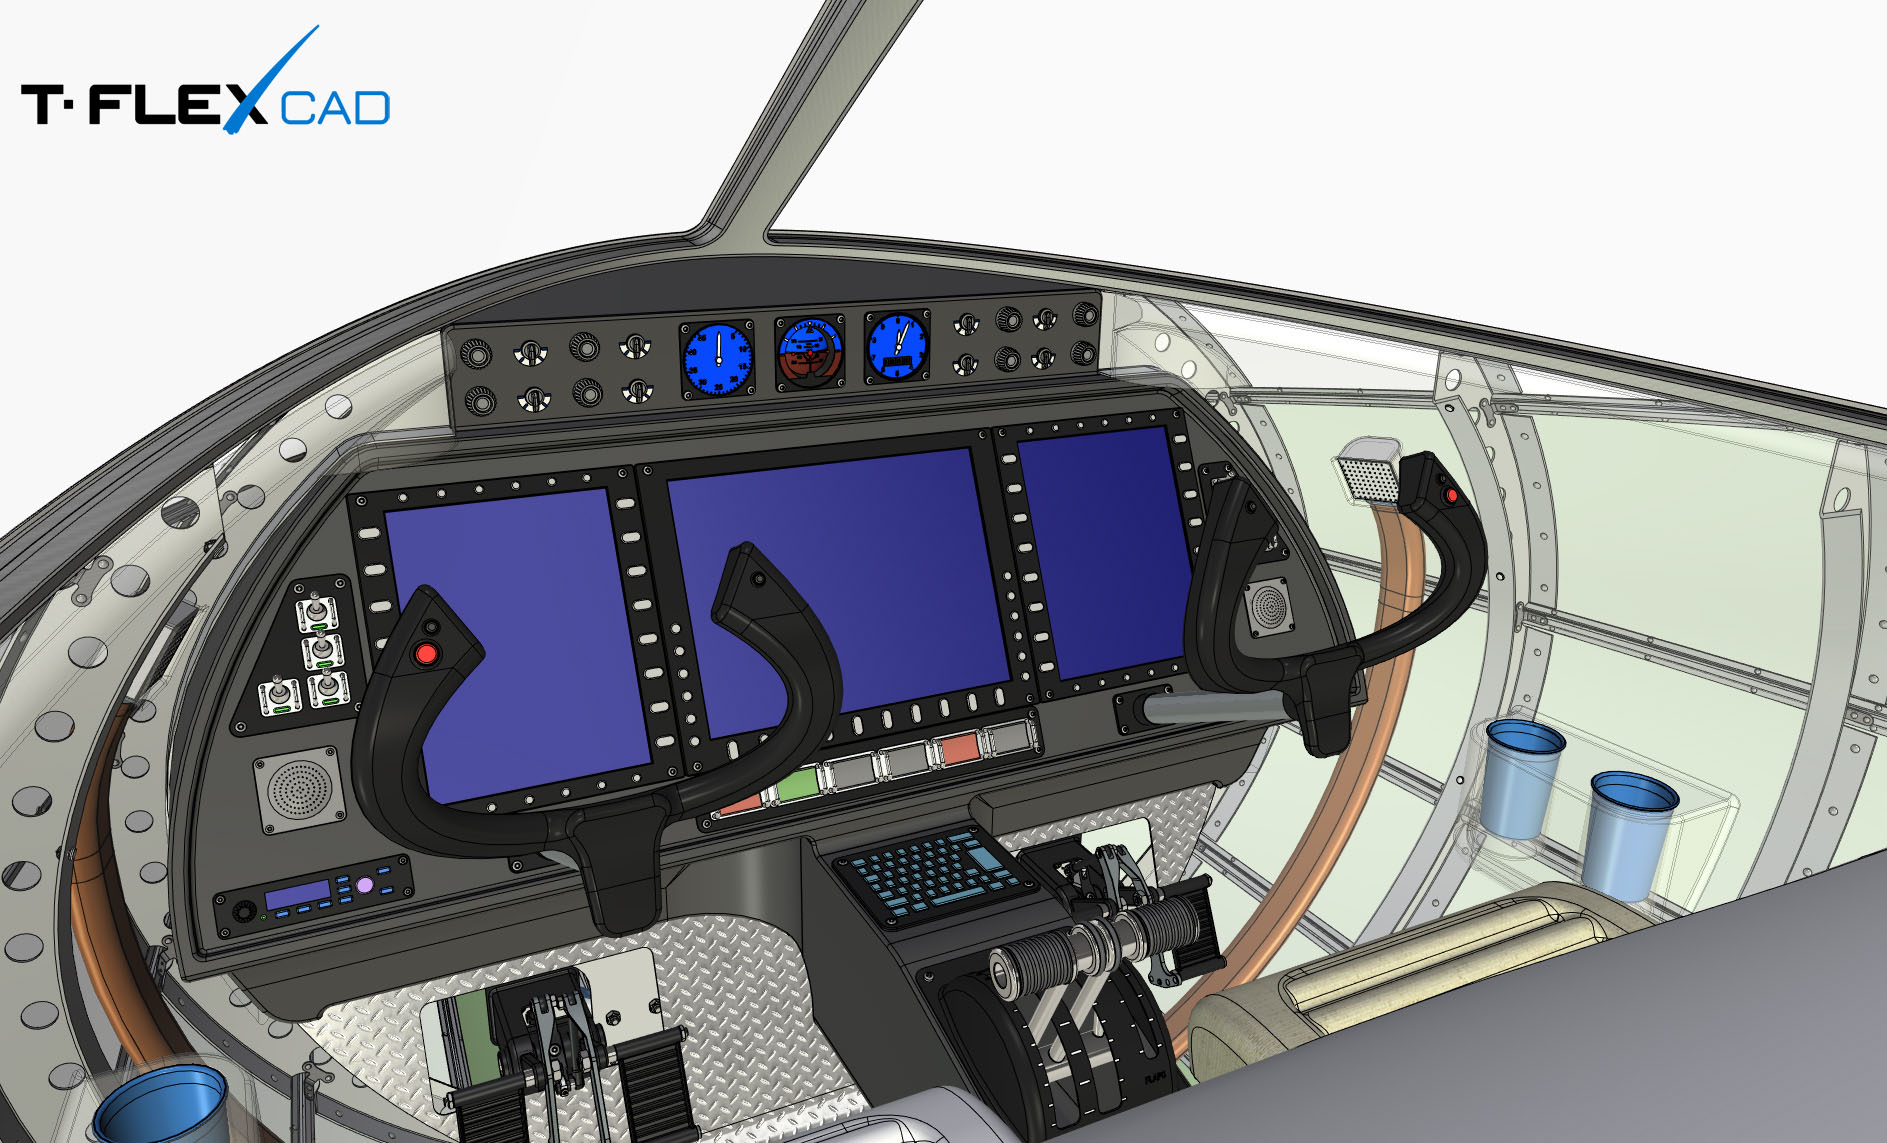 Business Jet Cockpit